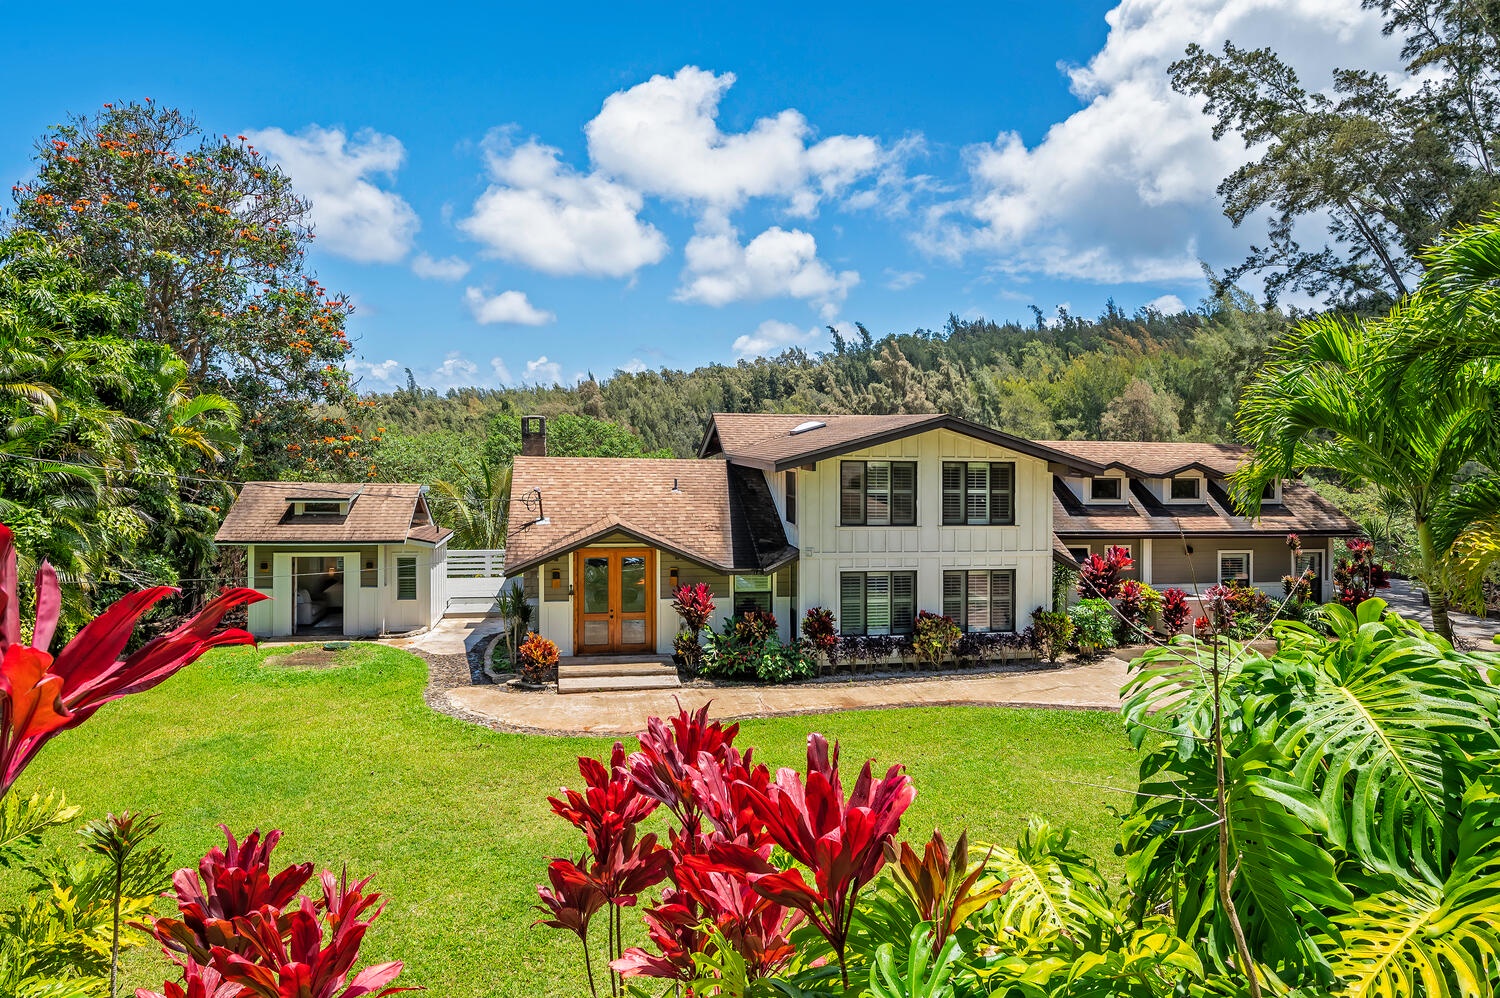 Haleiwa Vacation Rentals, Mele Makana - Welcome to Mele Makana, a private and gated home in Haleiwa